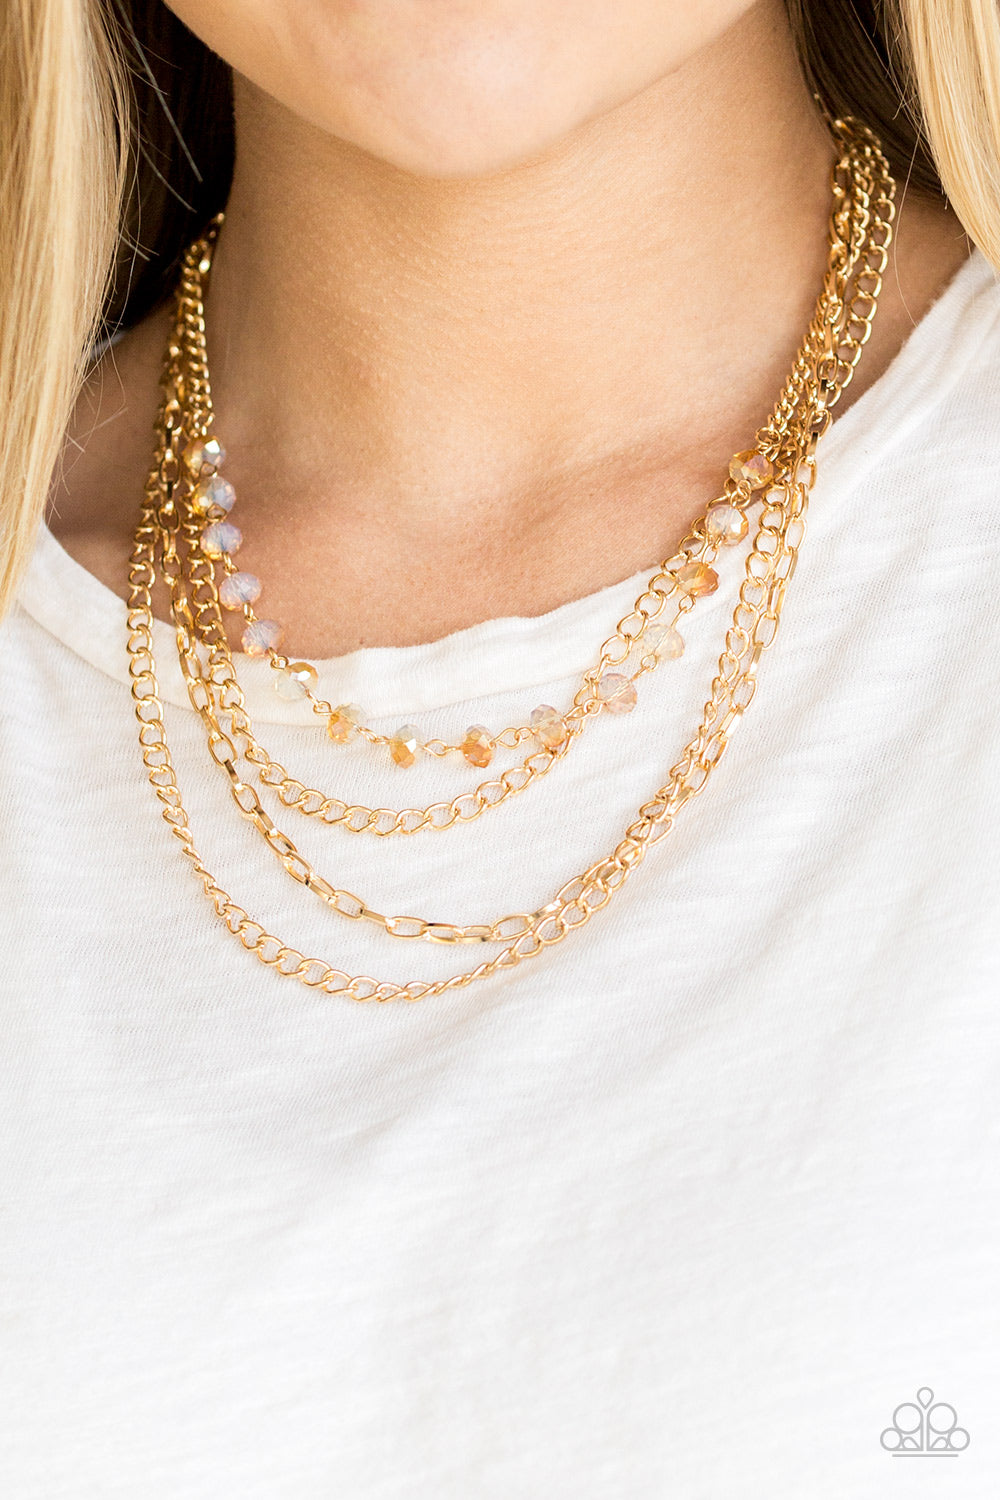 Extravagant Elegance - Gold Necklace Set - Princess Glam Shop